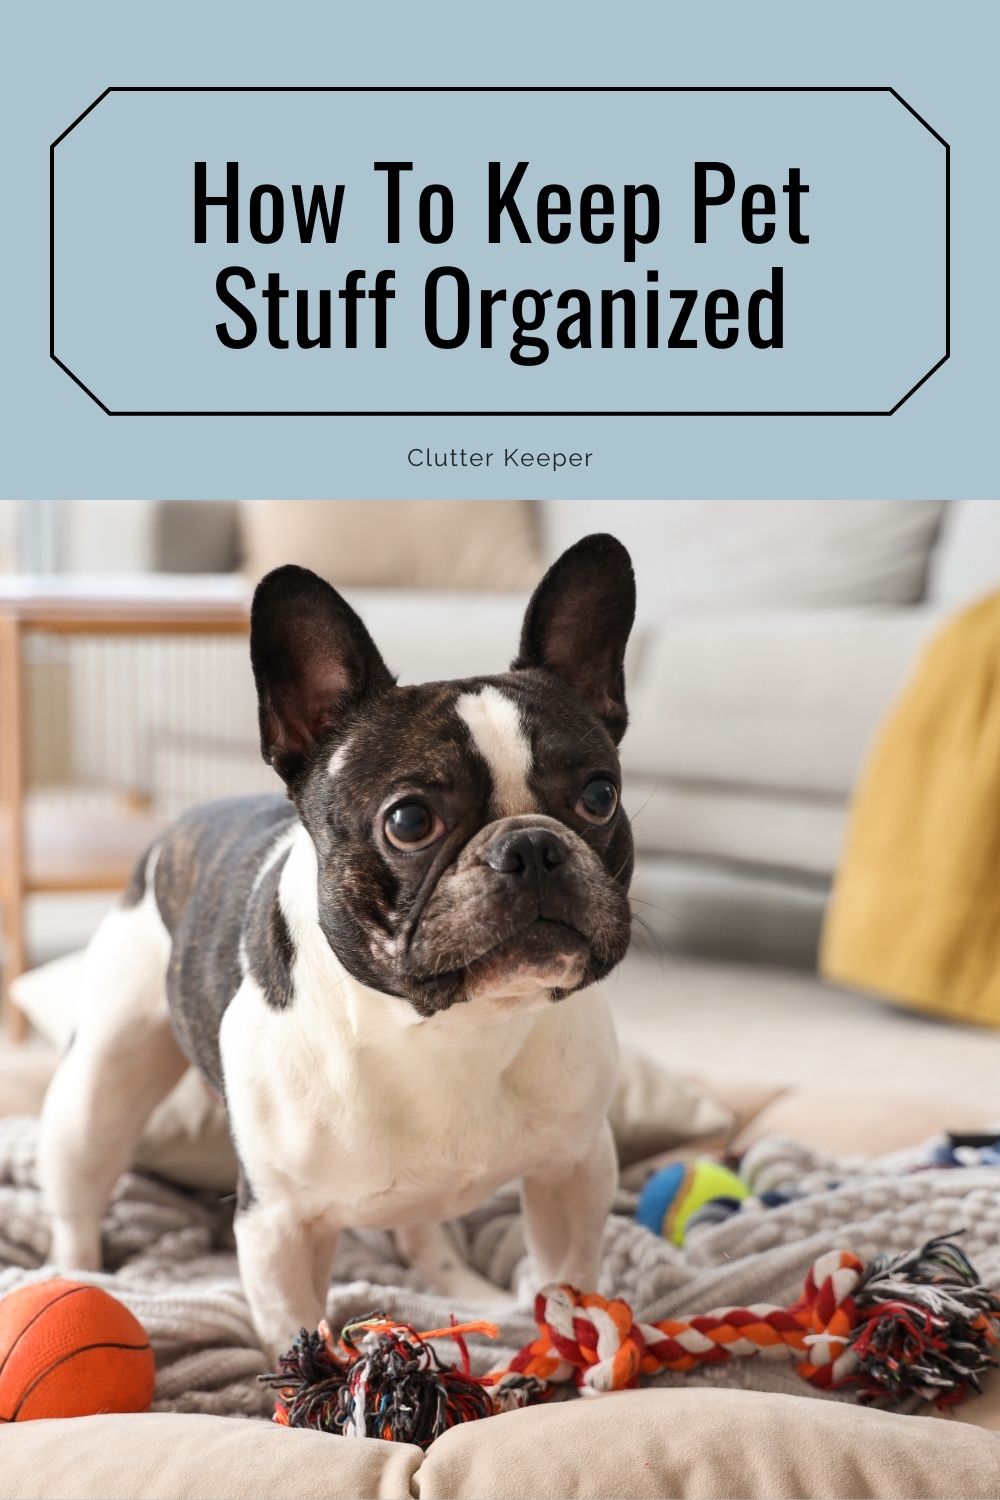 How to keep pet stuff organized.